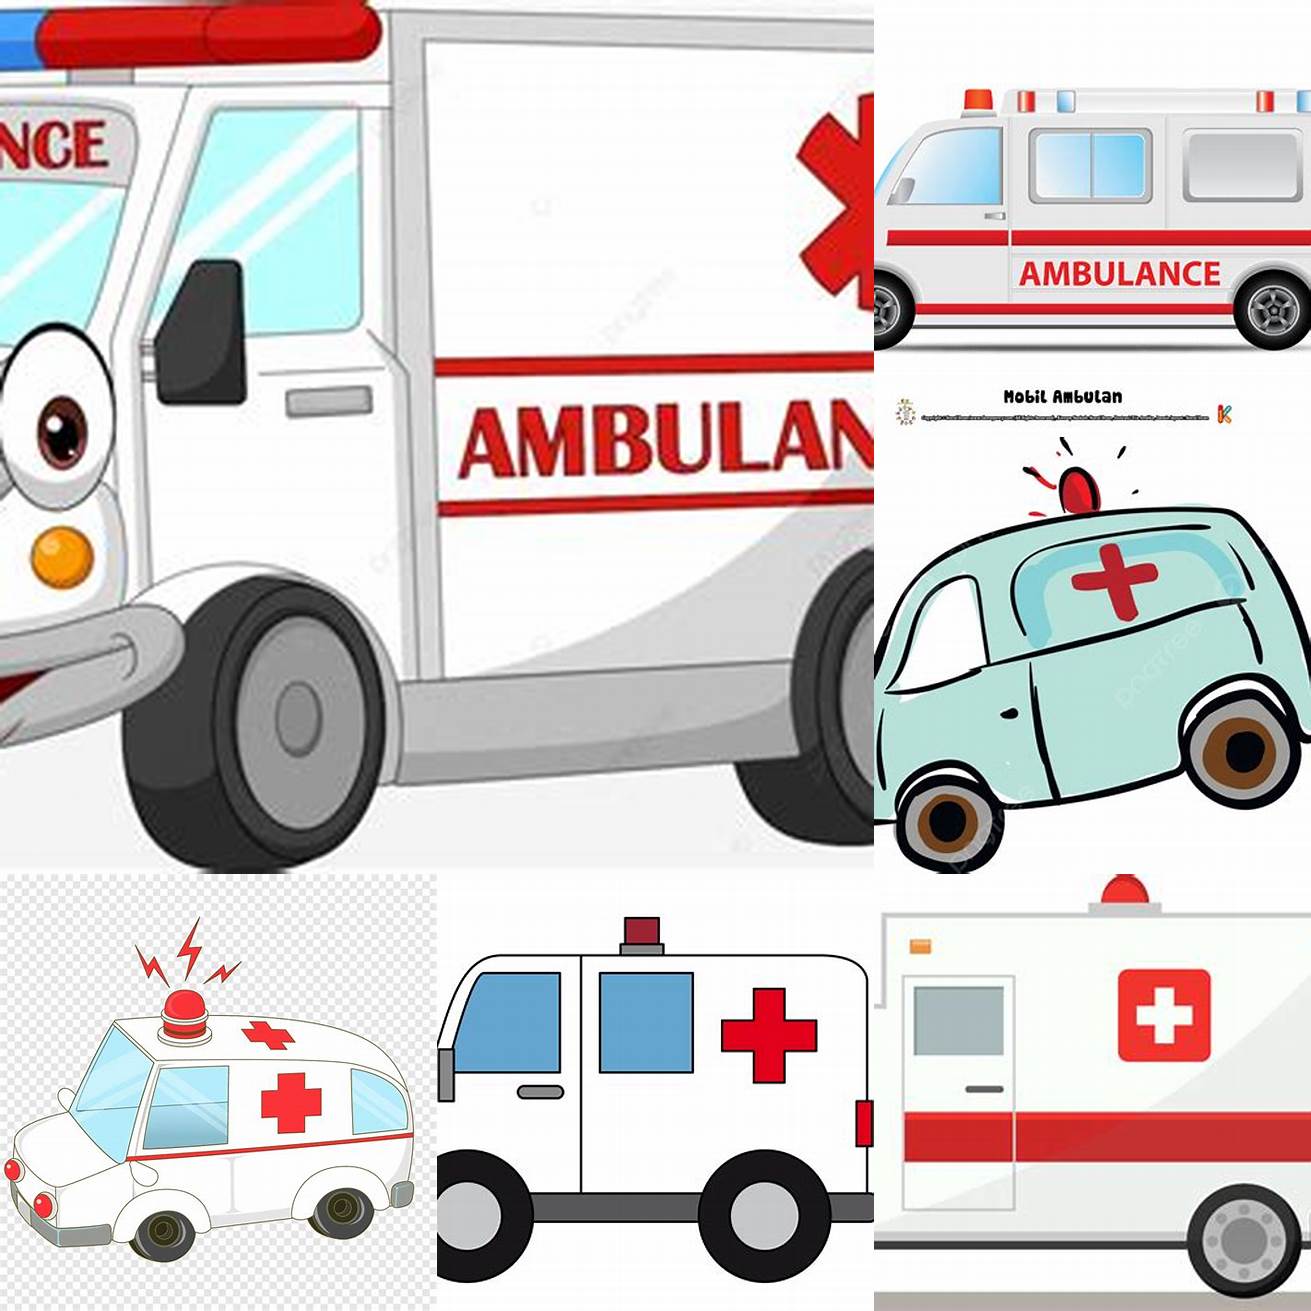 Mobil ambulance kartun dengan latar belakang yang indah